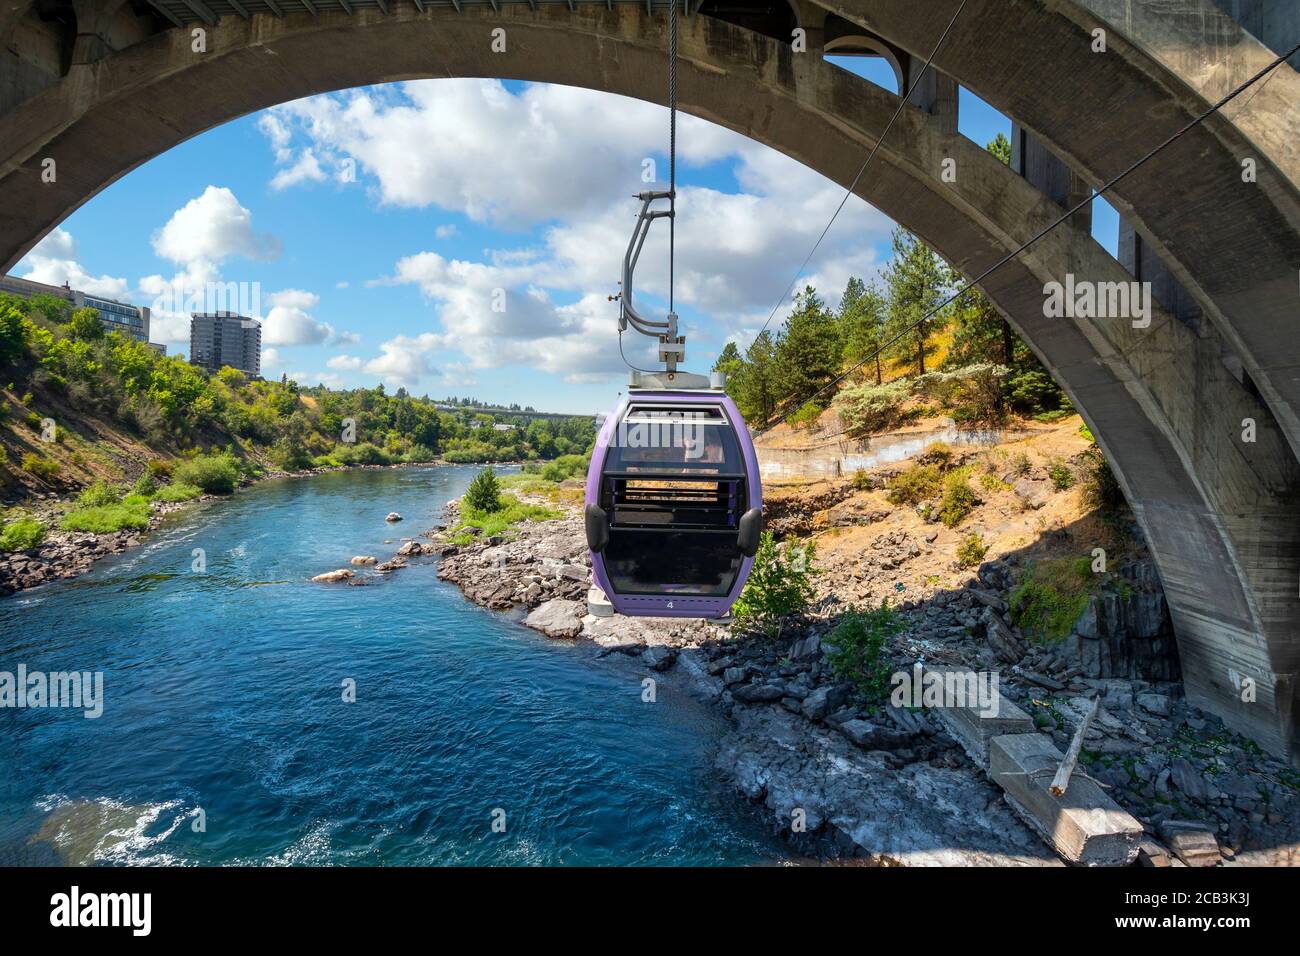 View from a gondola on a cable above the Spokane River at Riverfront Park, Spokane Washington, USA Stock Photo